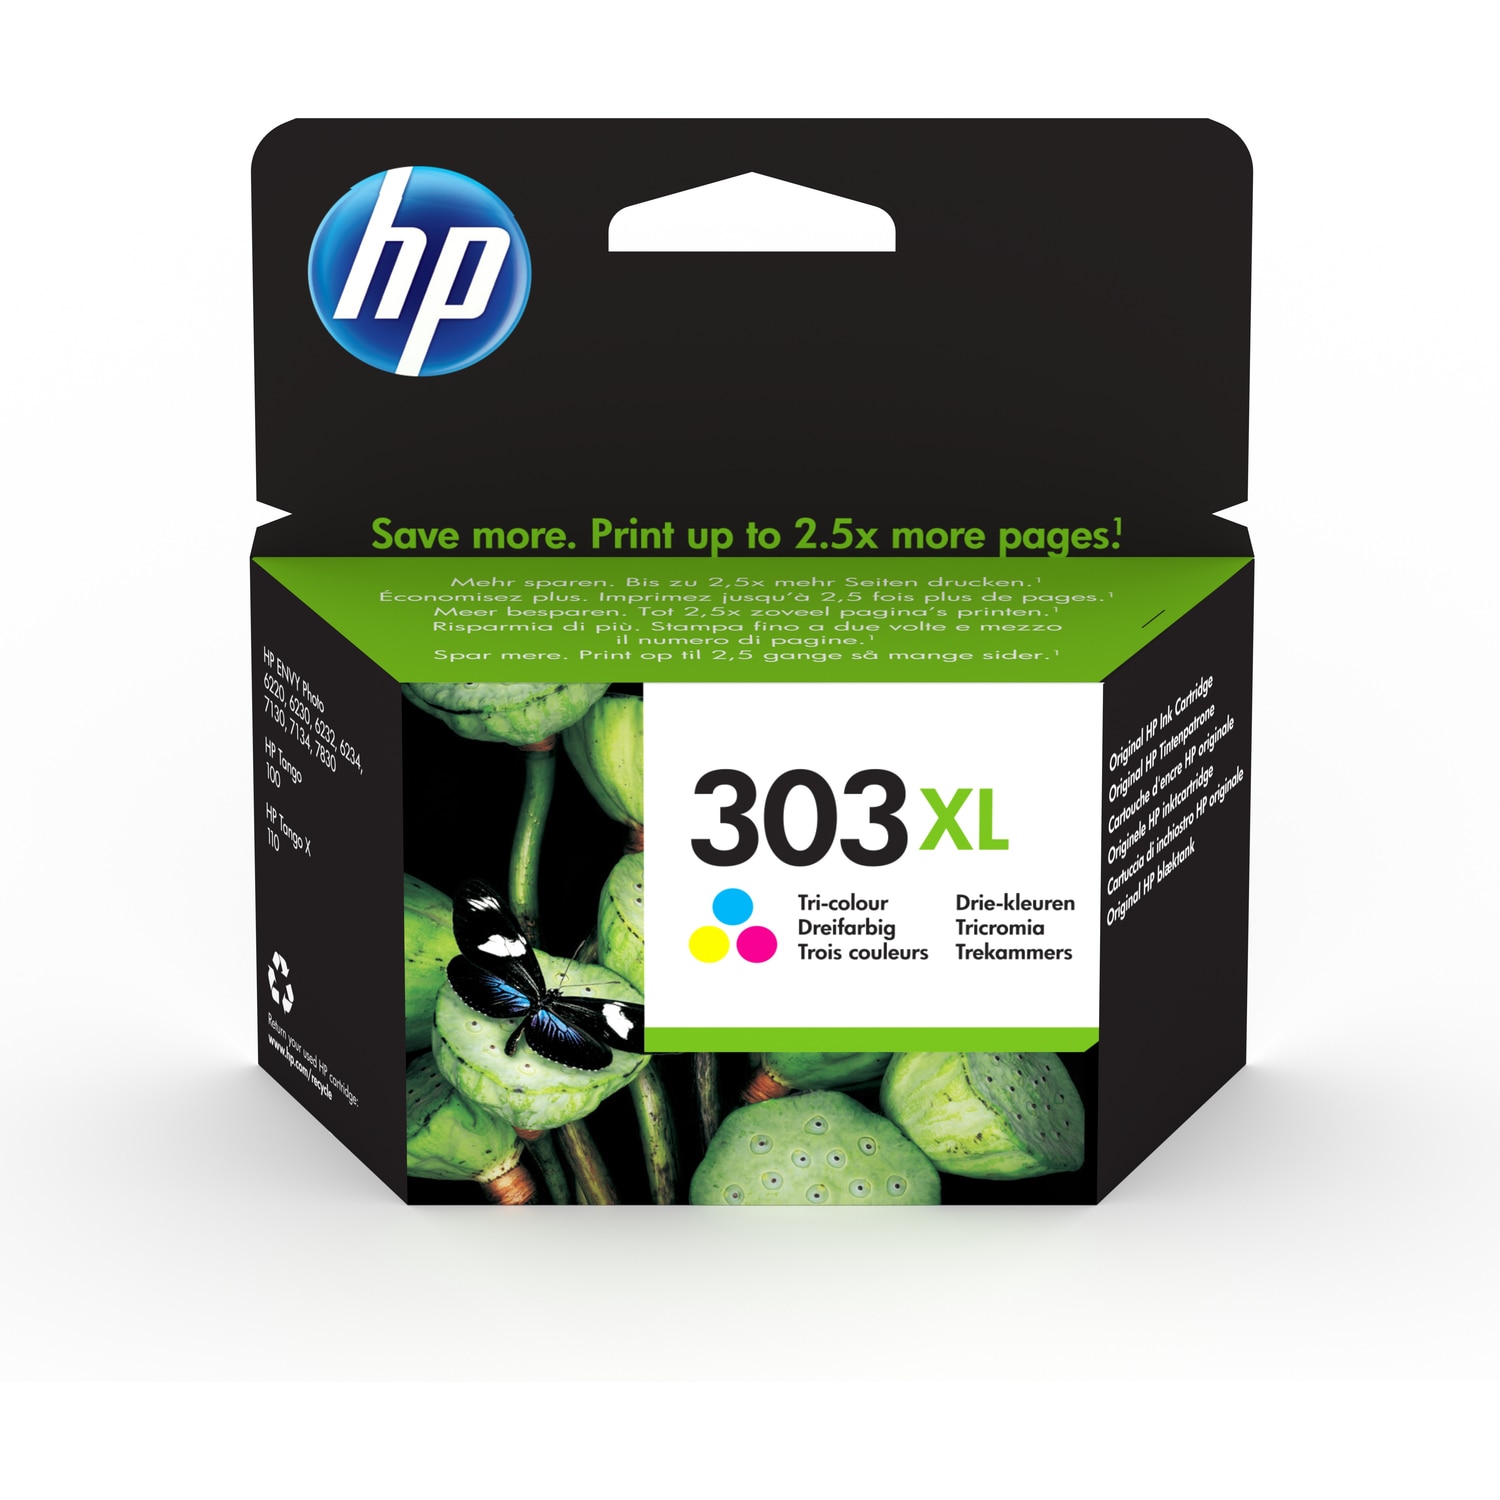 HP 303XL High Yield Tri-color Original Ink Cartridge0 